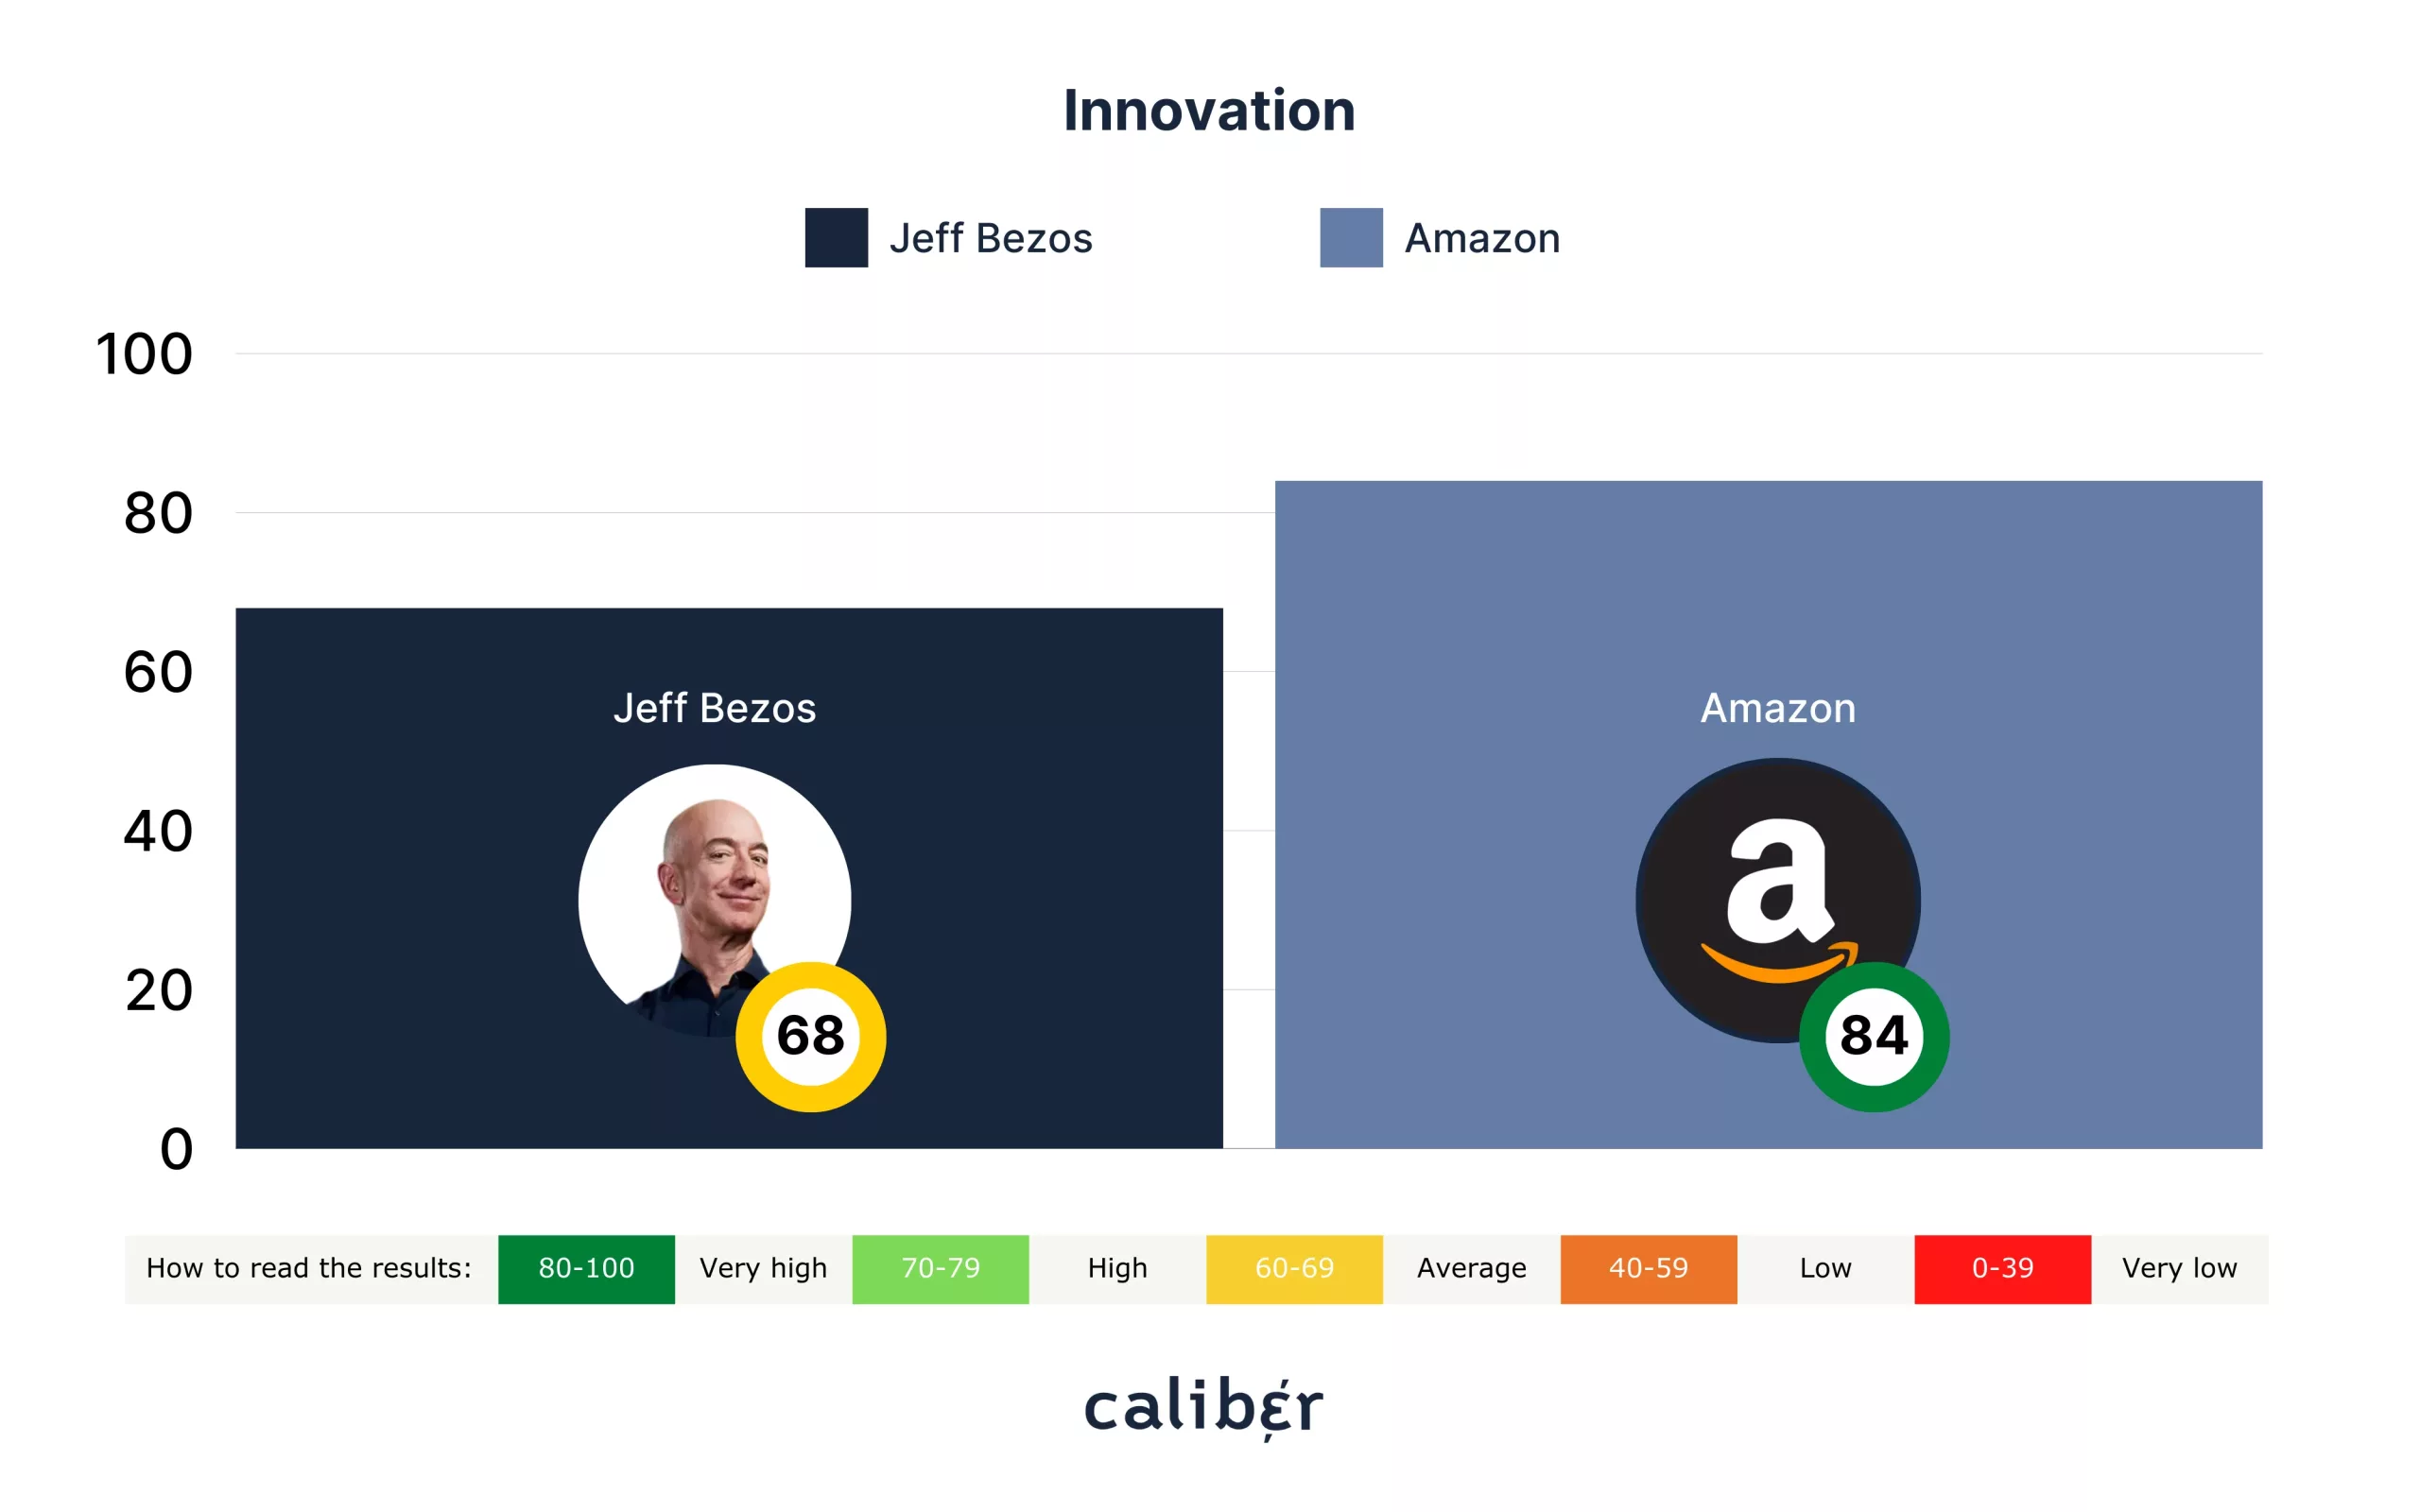 Jeff Bezos Innovation Score